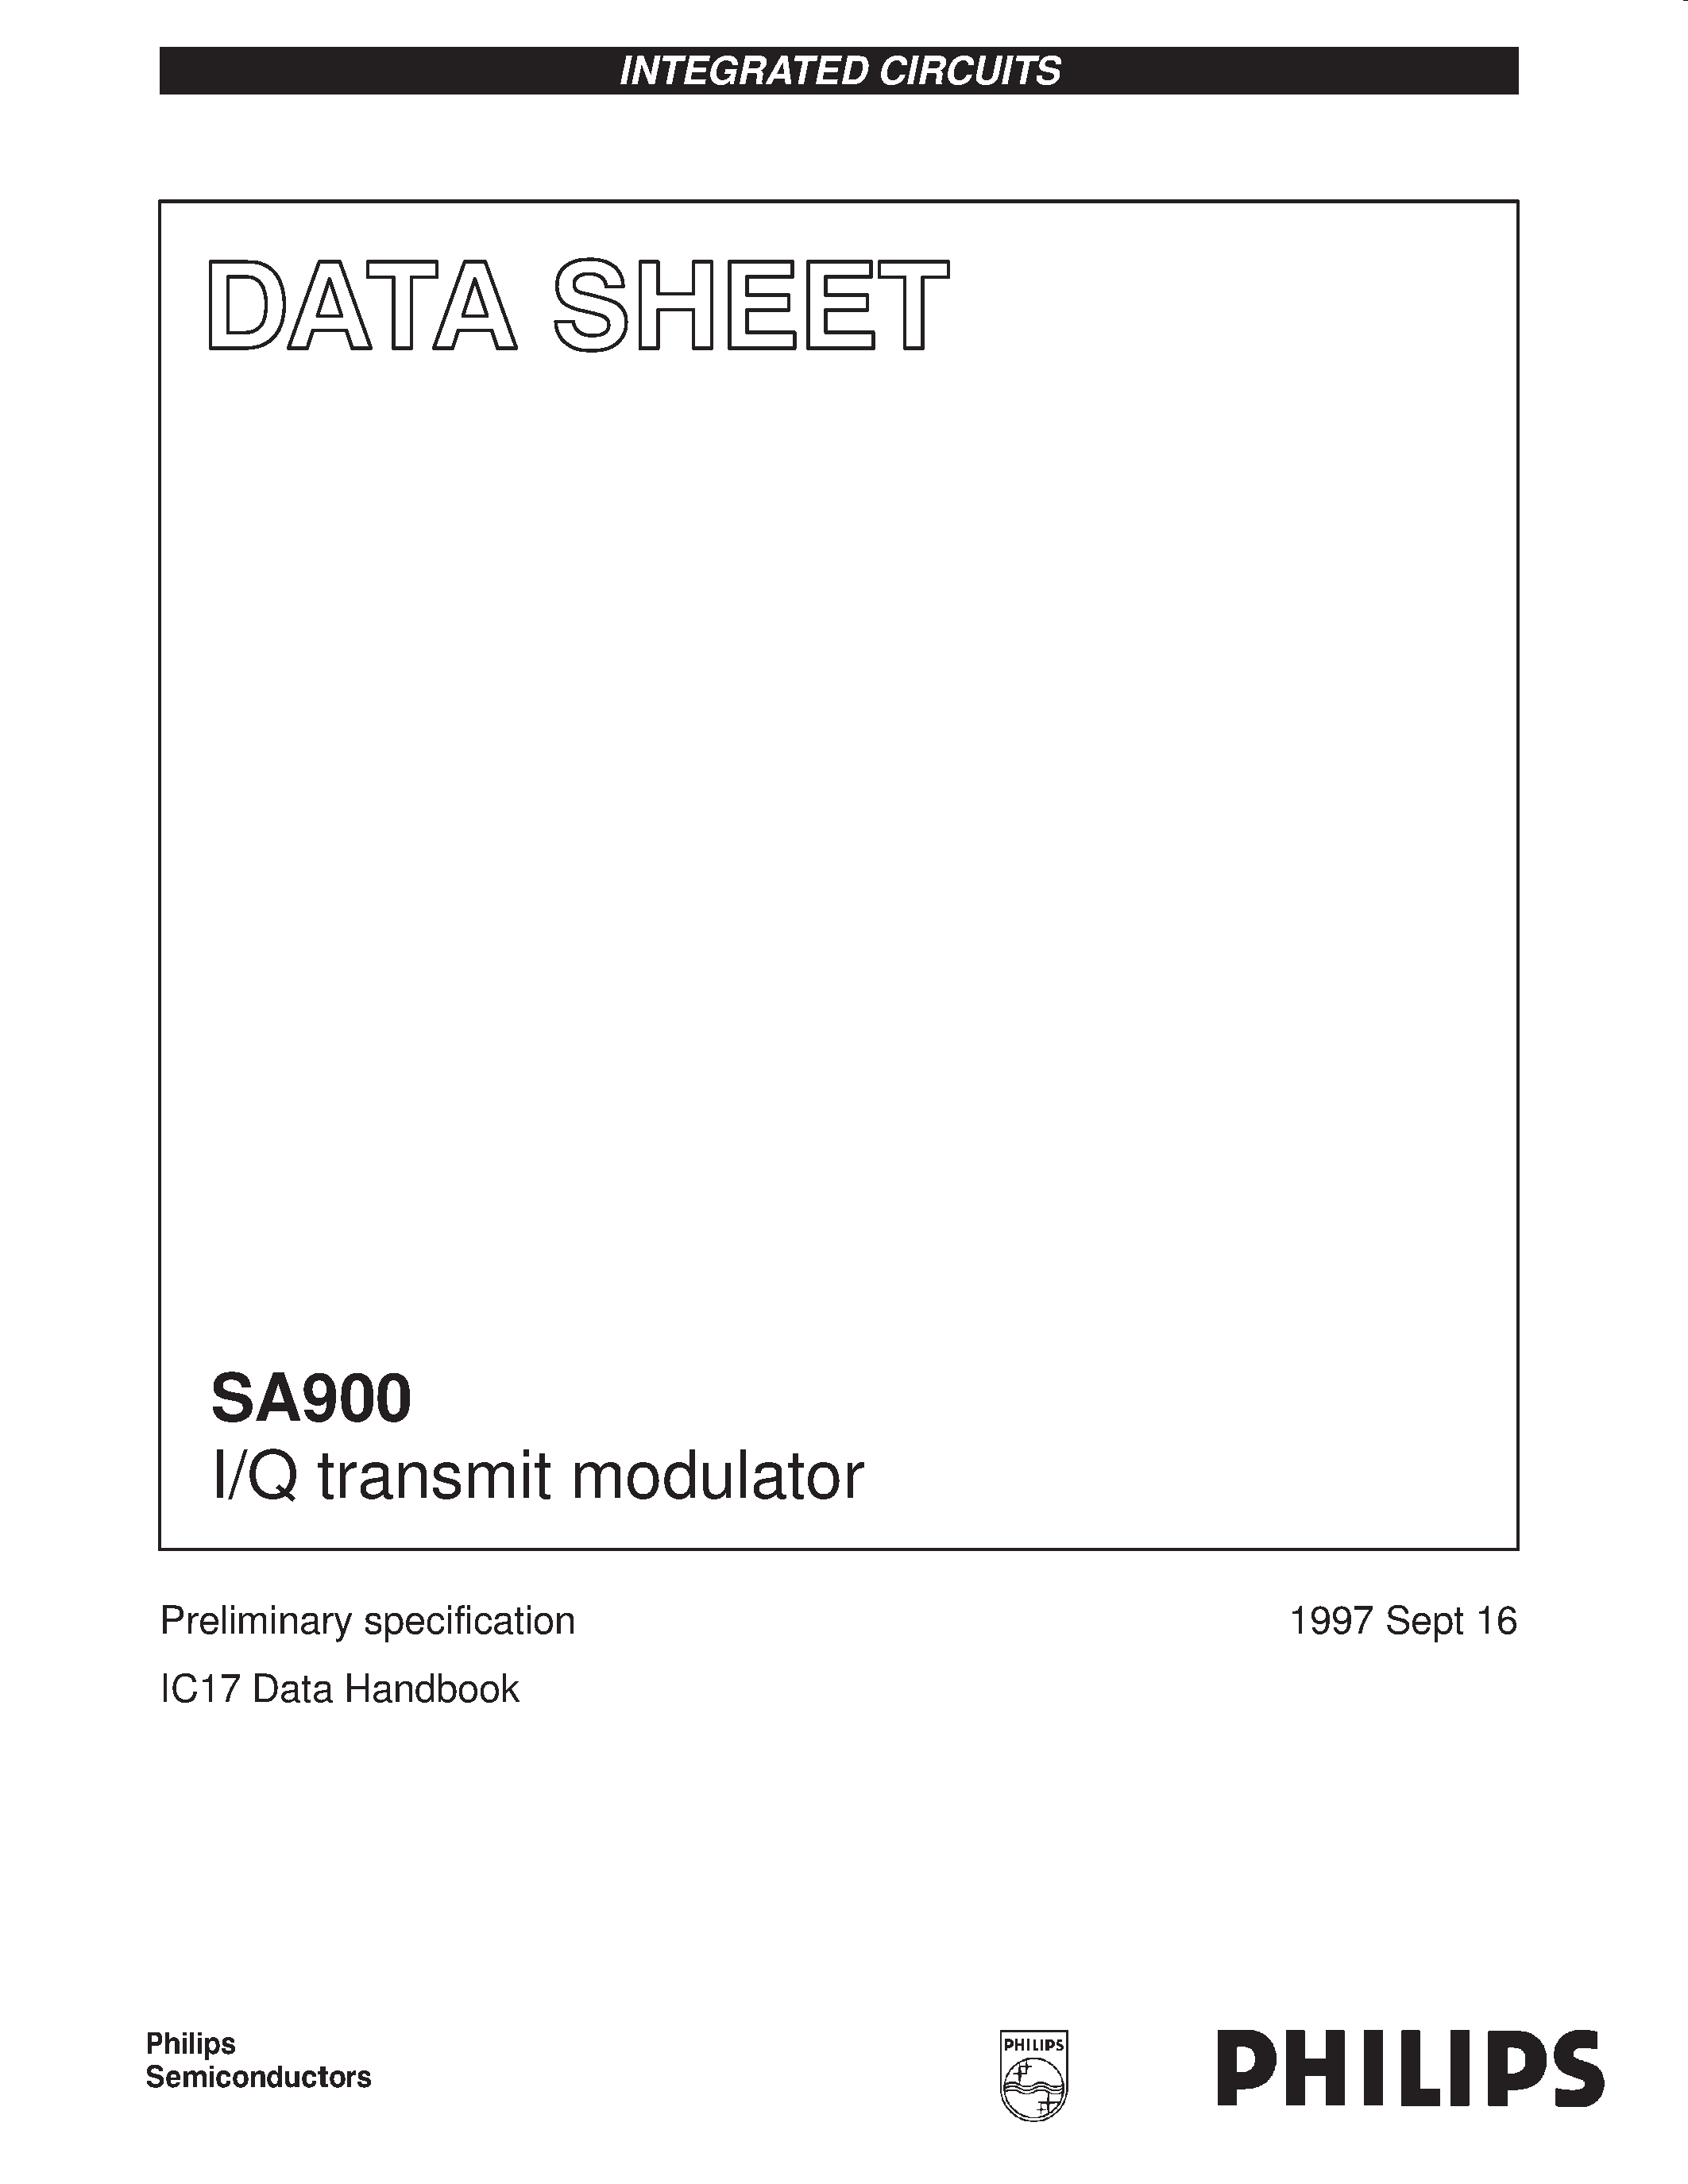 Datasheet SA900 - I/Q transmit modulator page 1